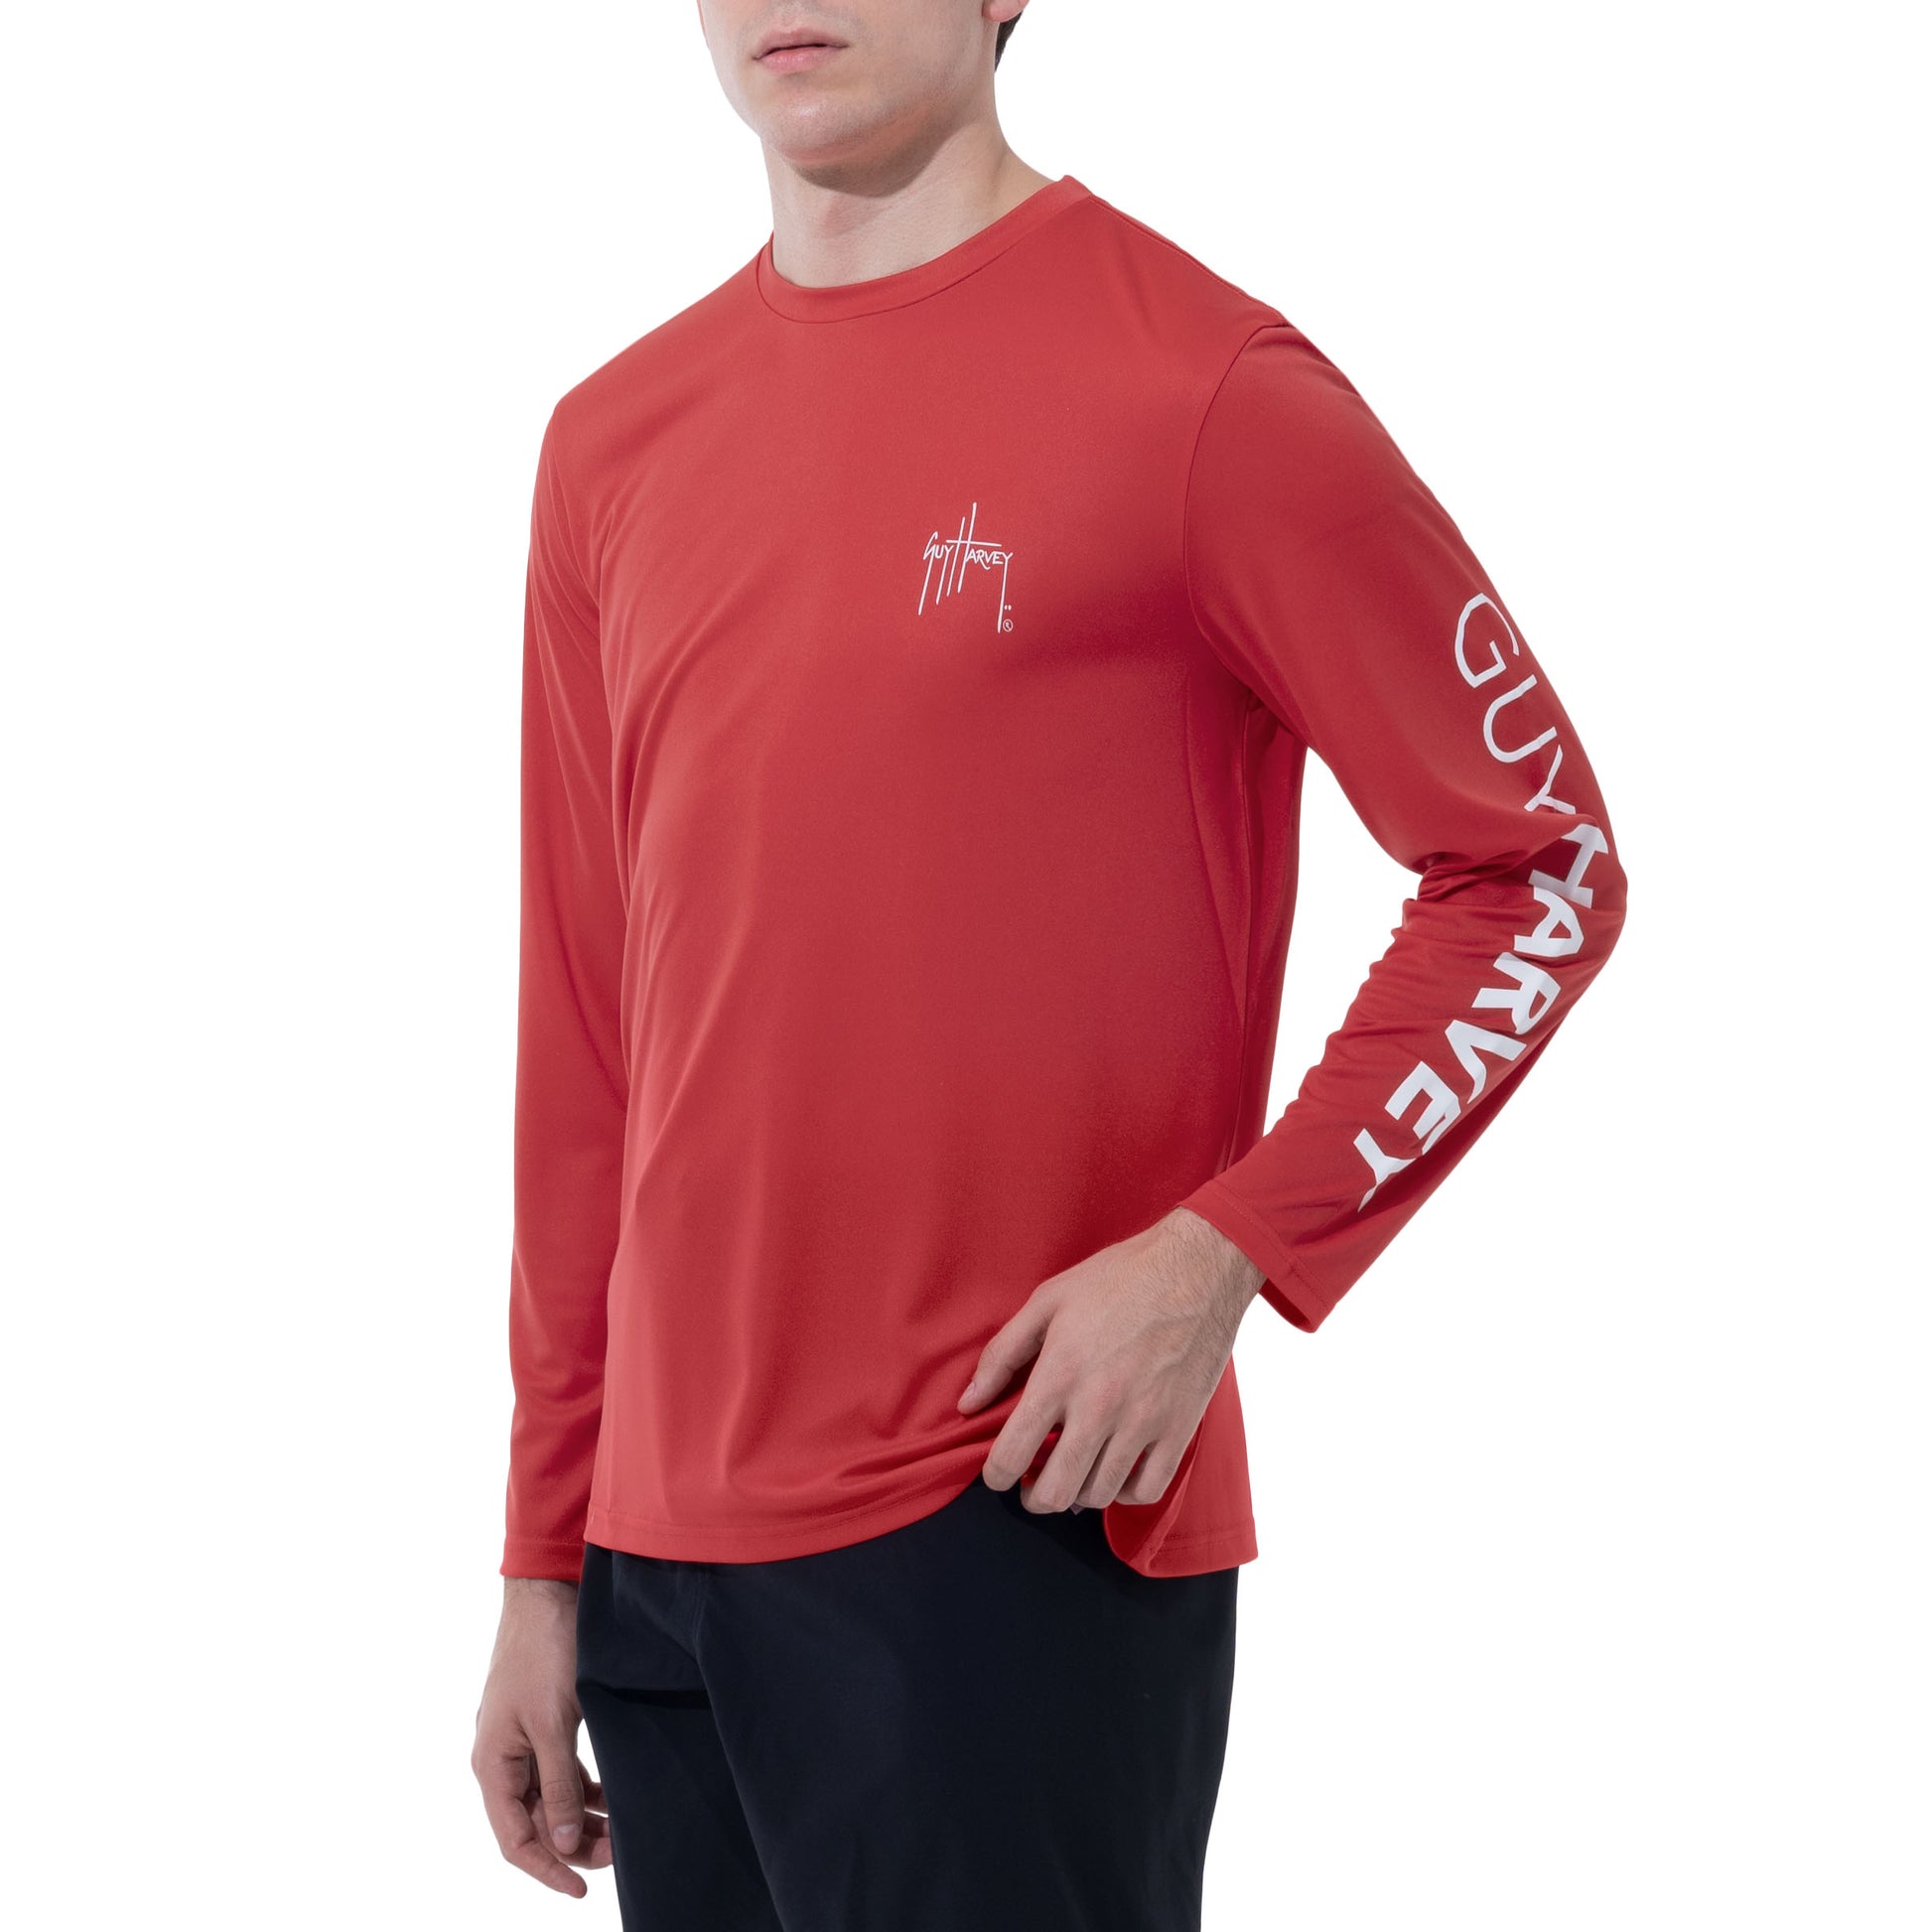  Contour Athletics UV Long Sleeve Shirt for Men, UPF 50